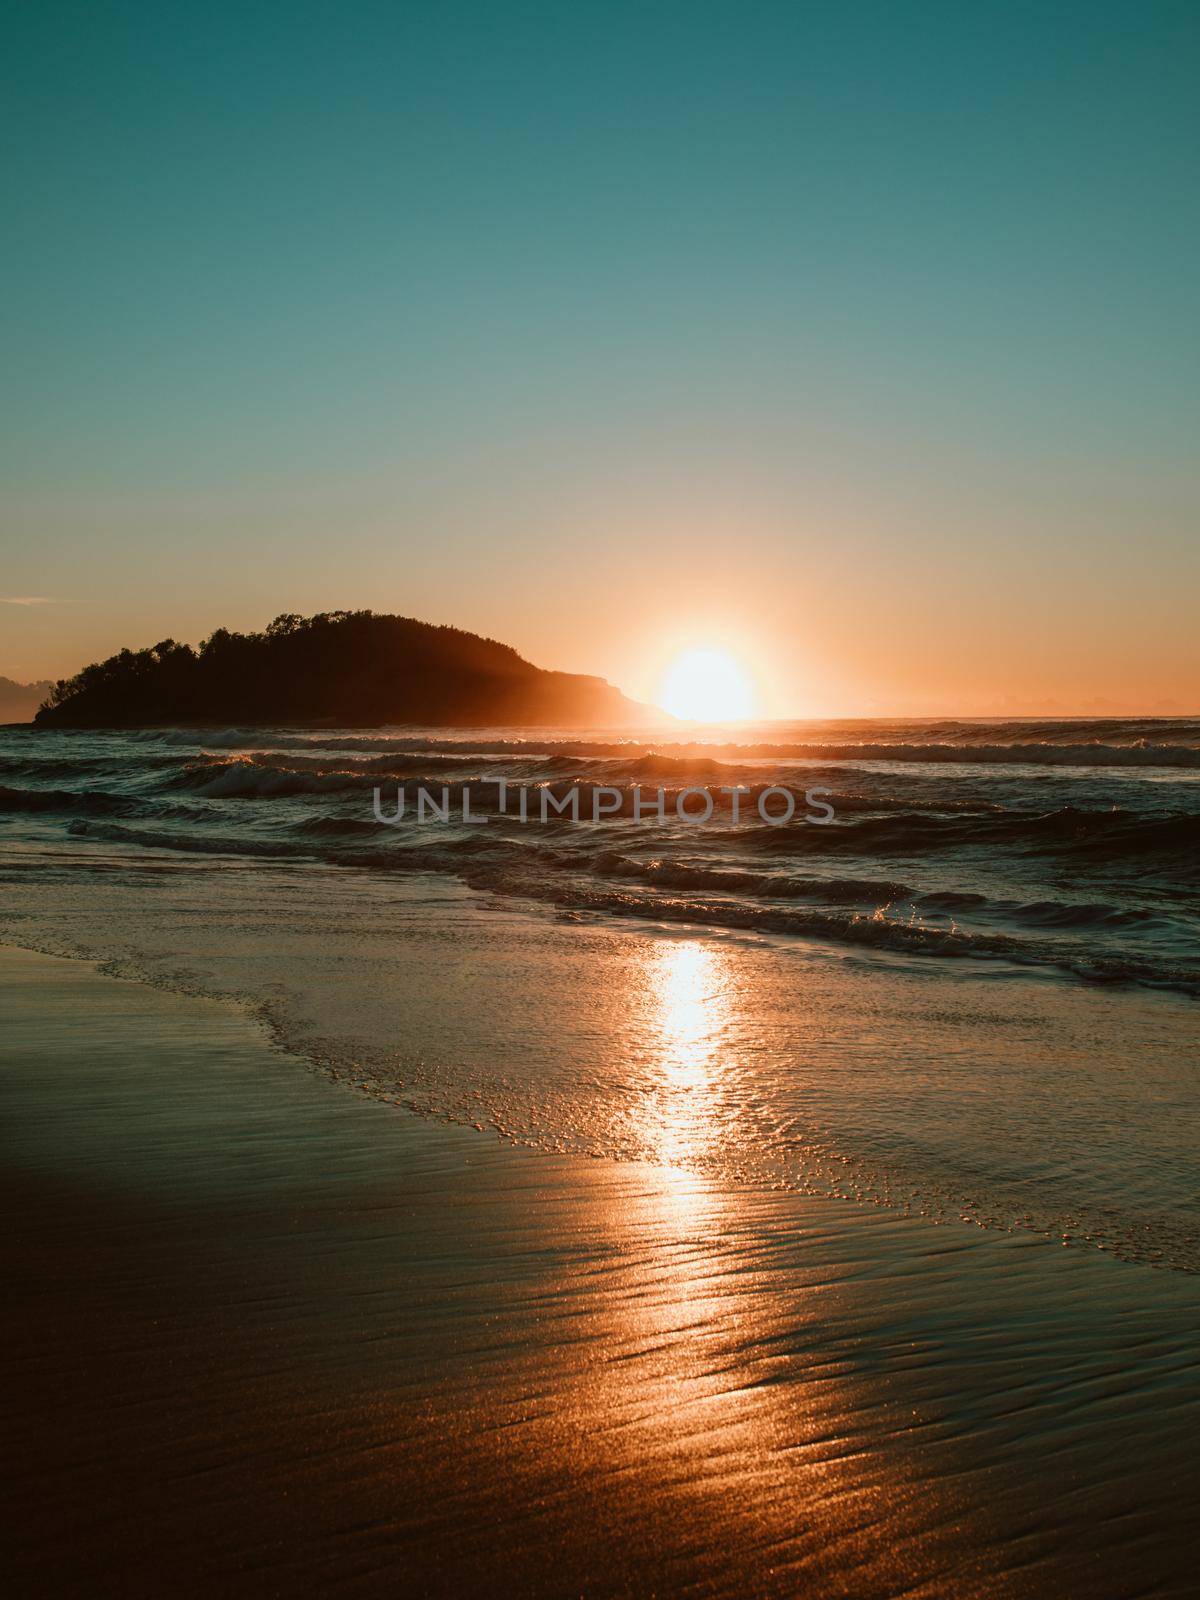 Sunrise on the beach and ocean waves. by braydenstanfordphoto